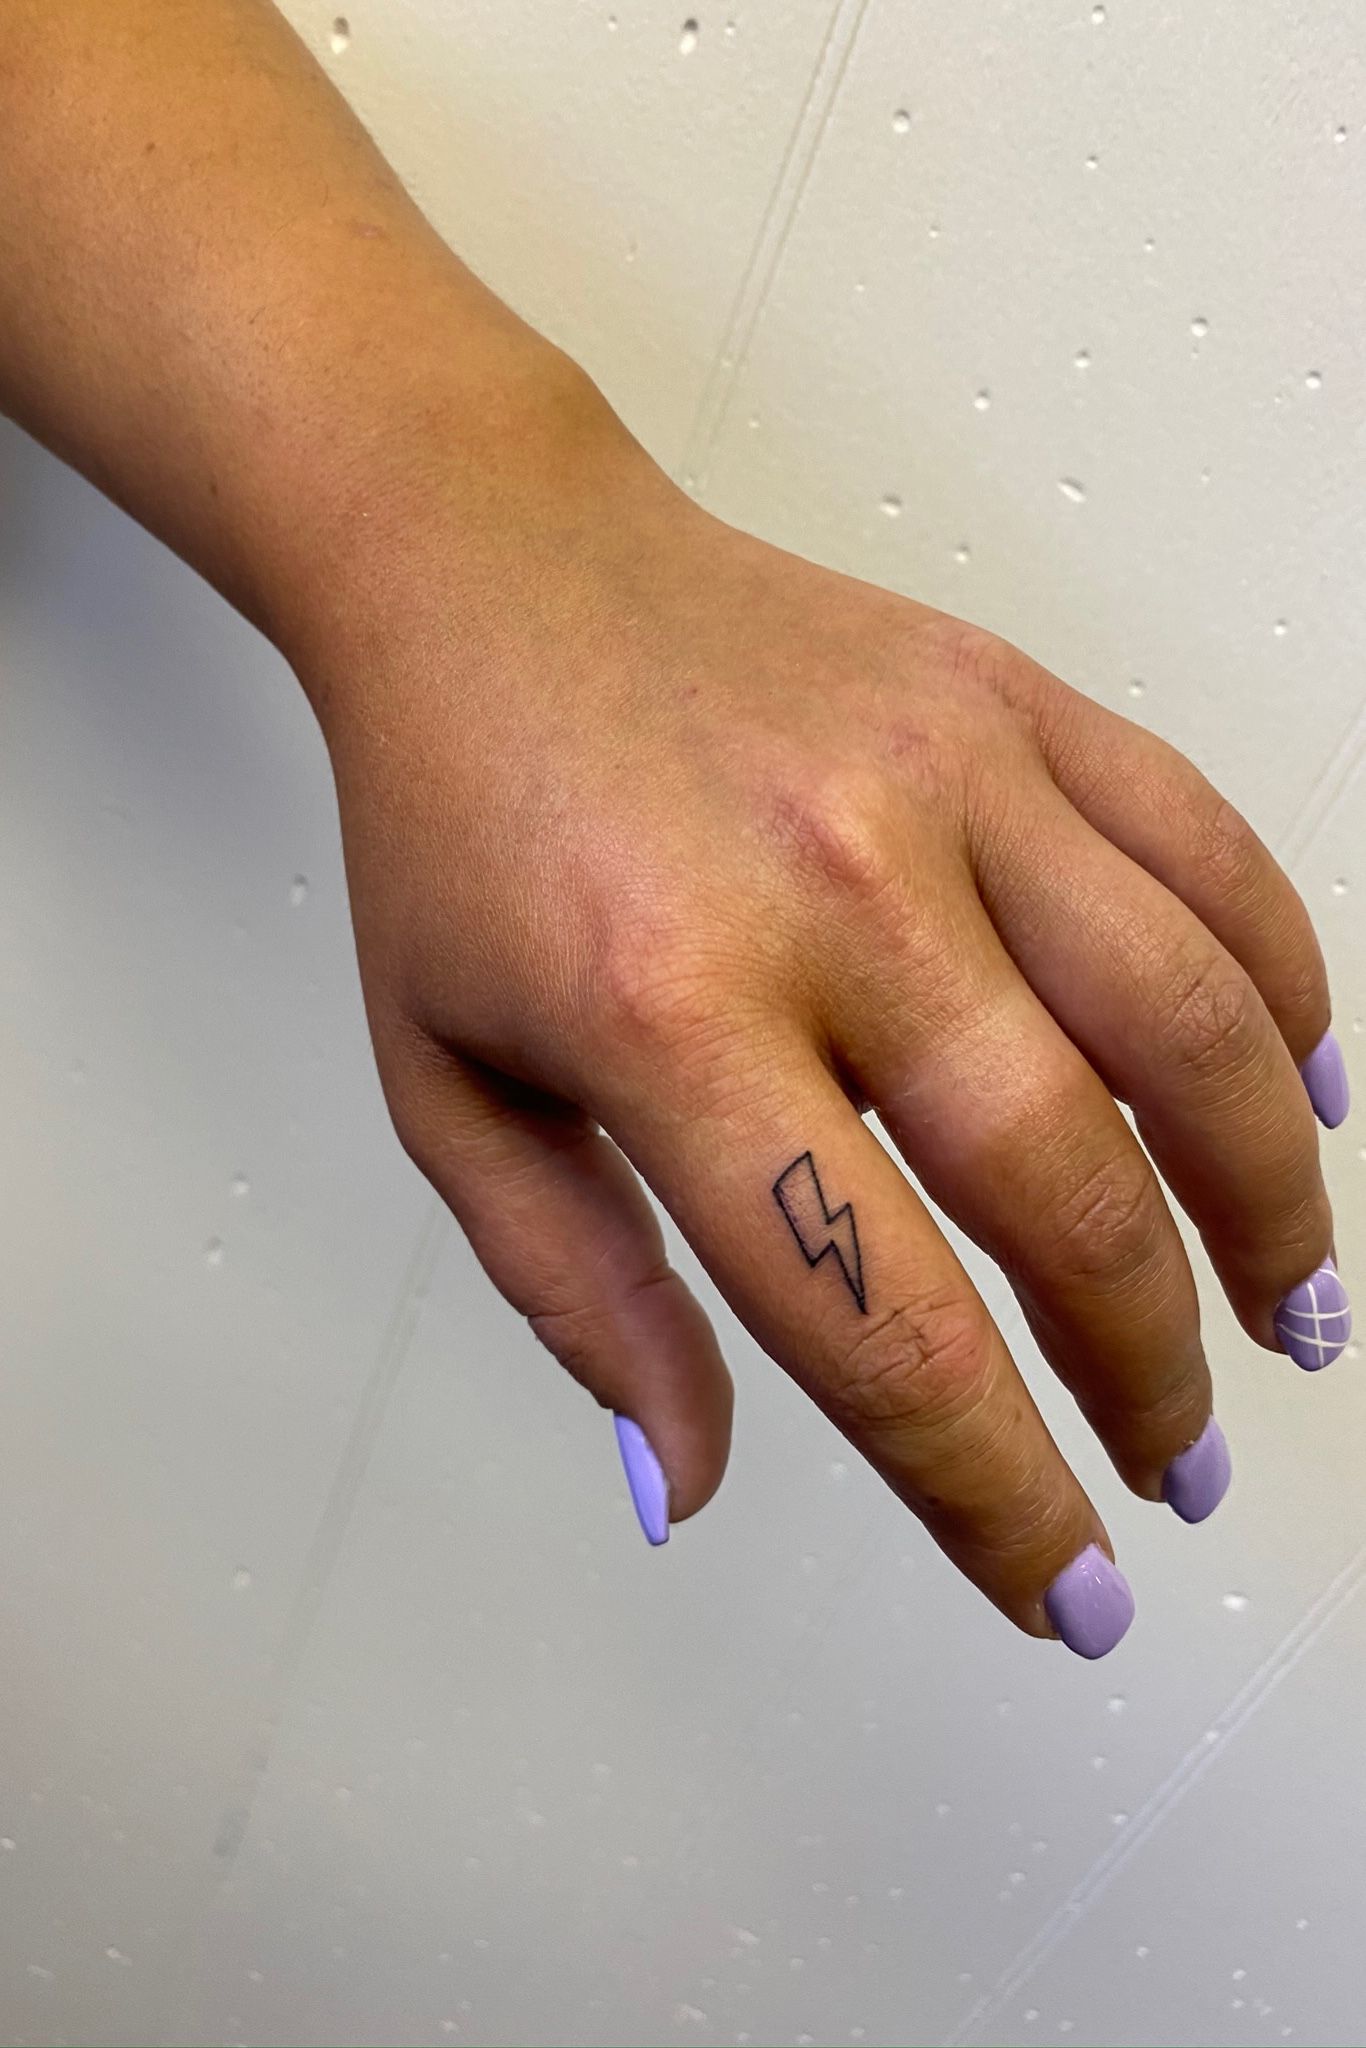 Improving a lightning hand tattoo originally done by another artist    TikTok